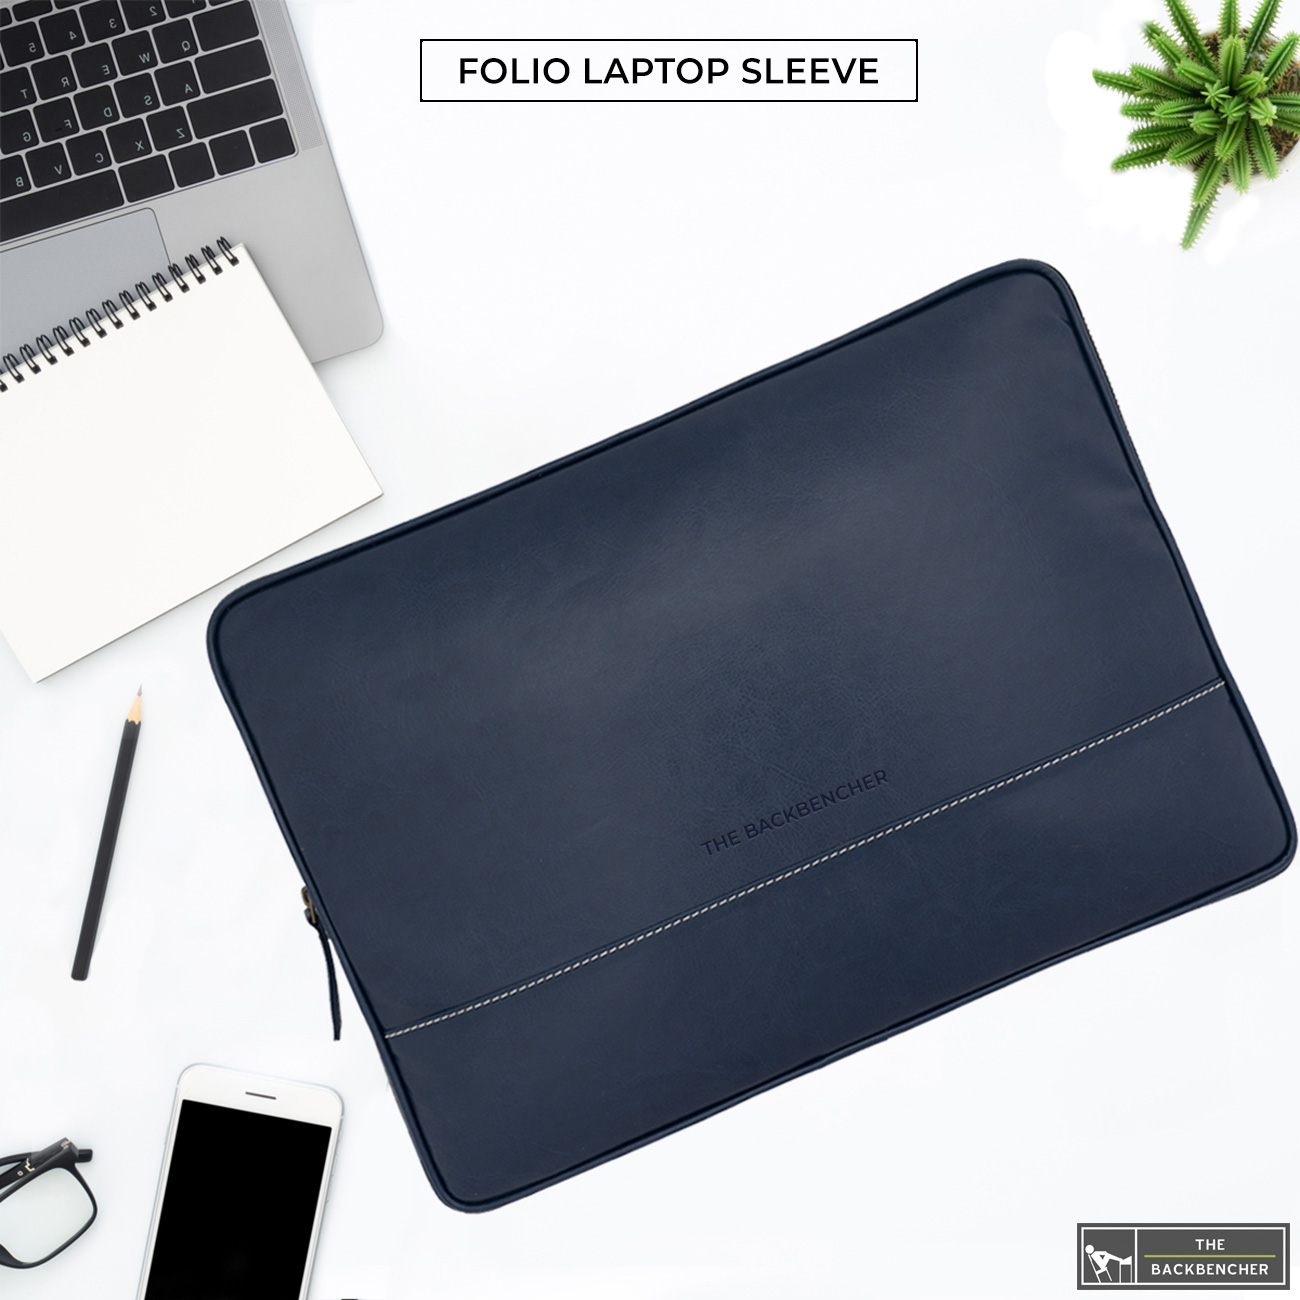 Folio Laptop Sleeve